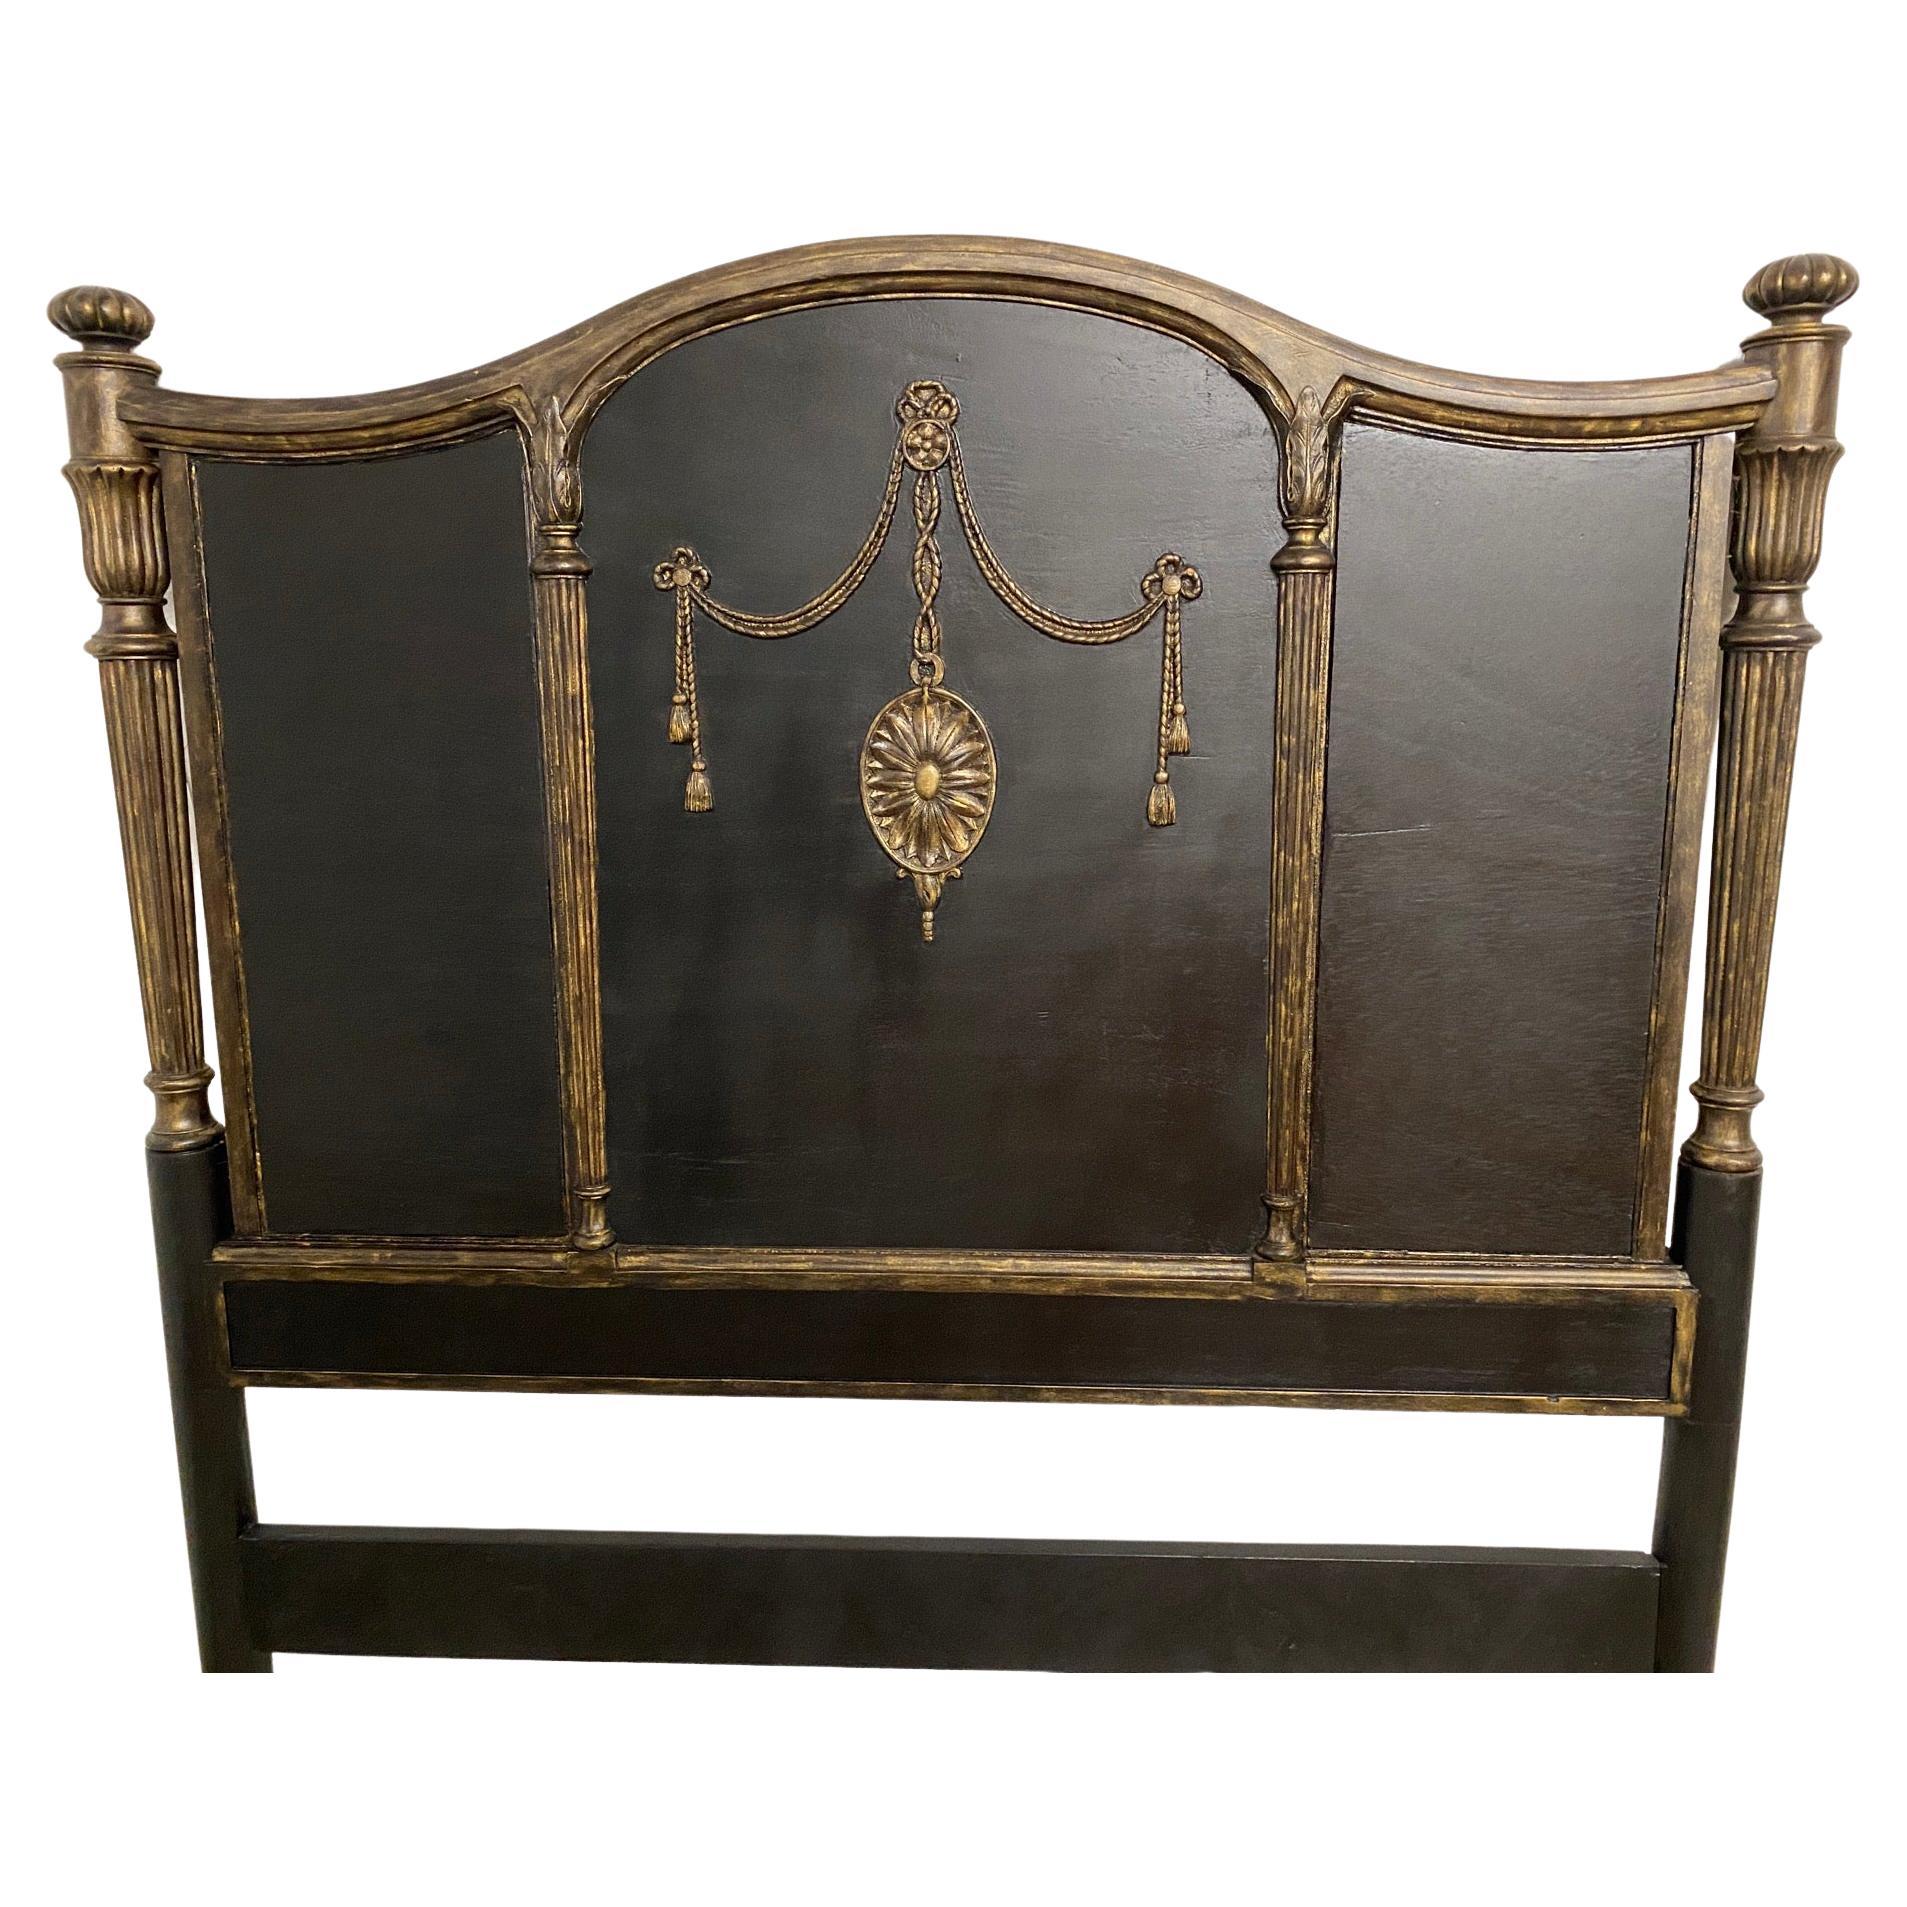 Tête de lit simple peinte de style Louis XVI en vente